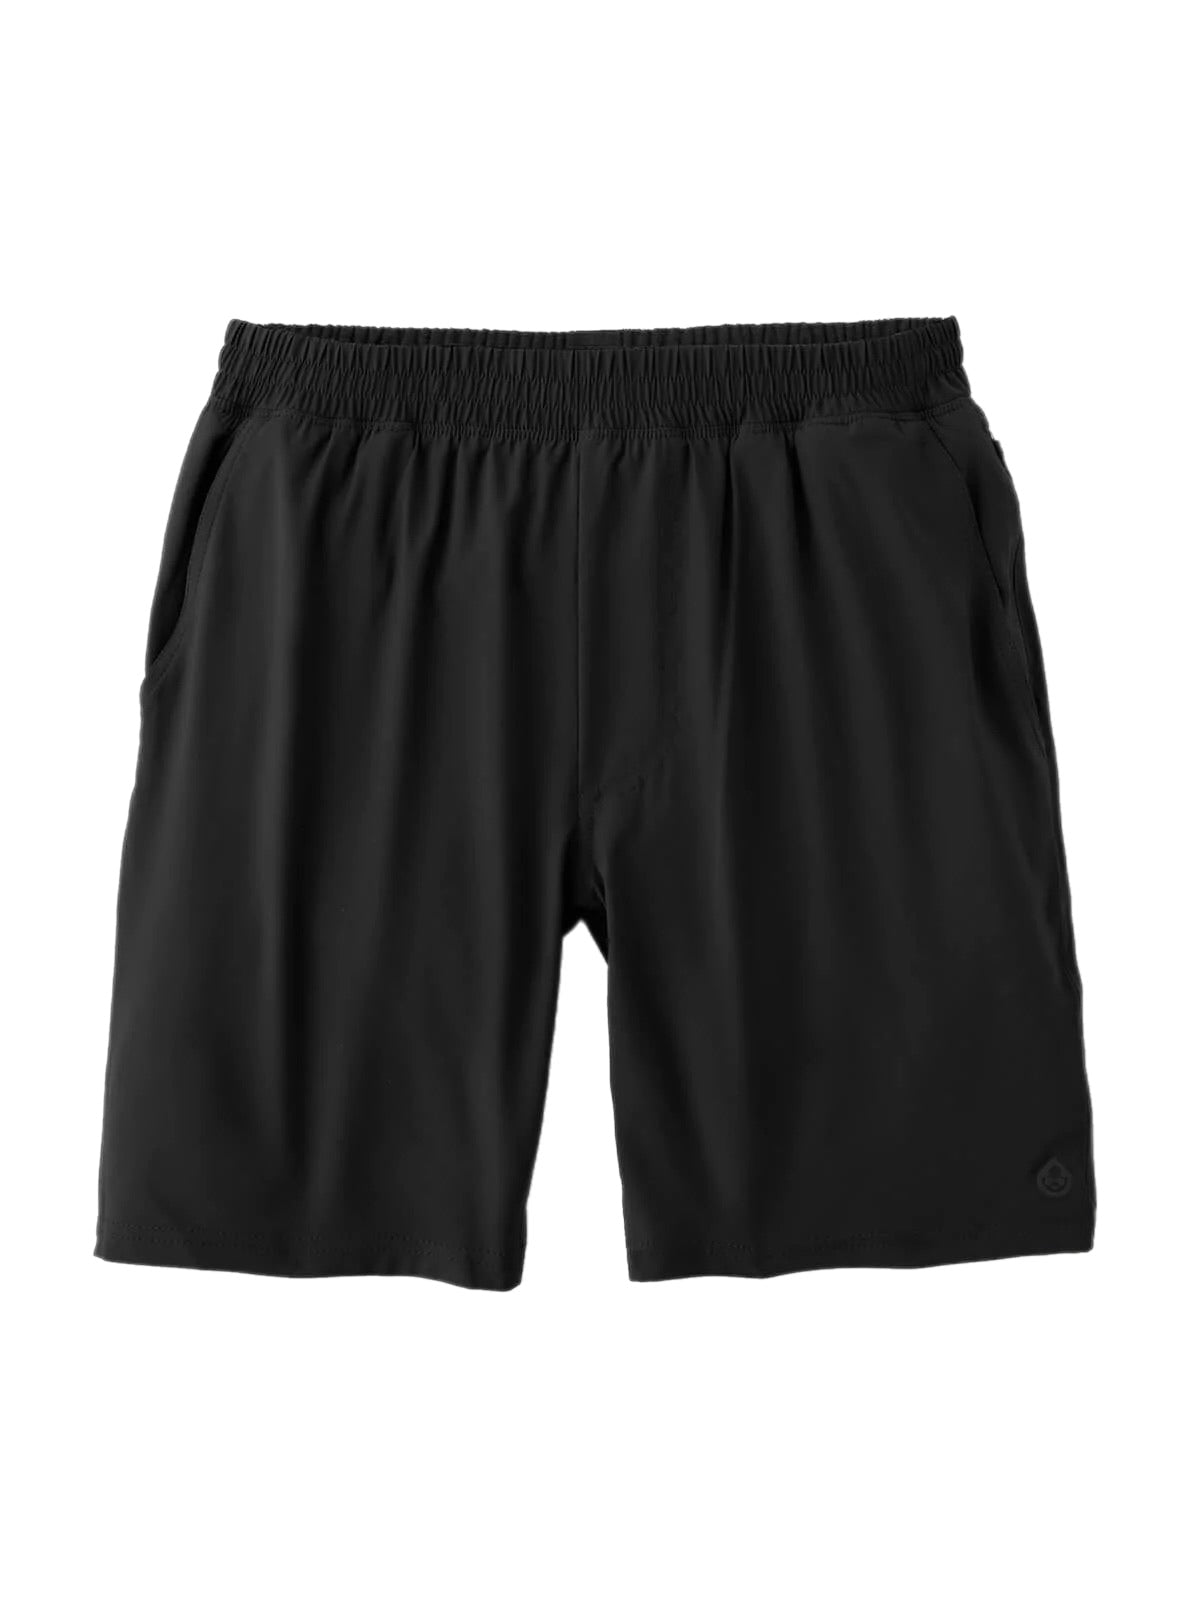 Tasc Recess 8” shorts